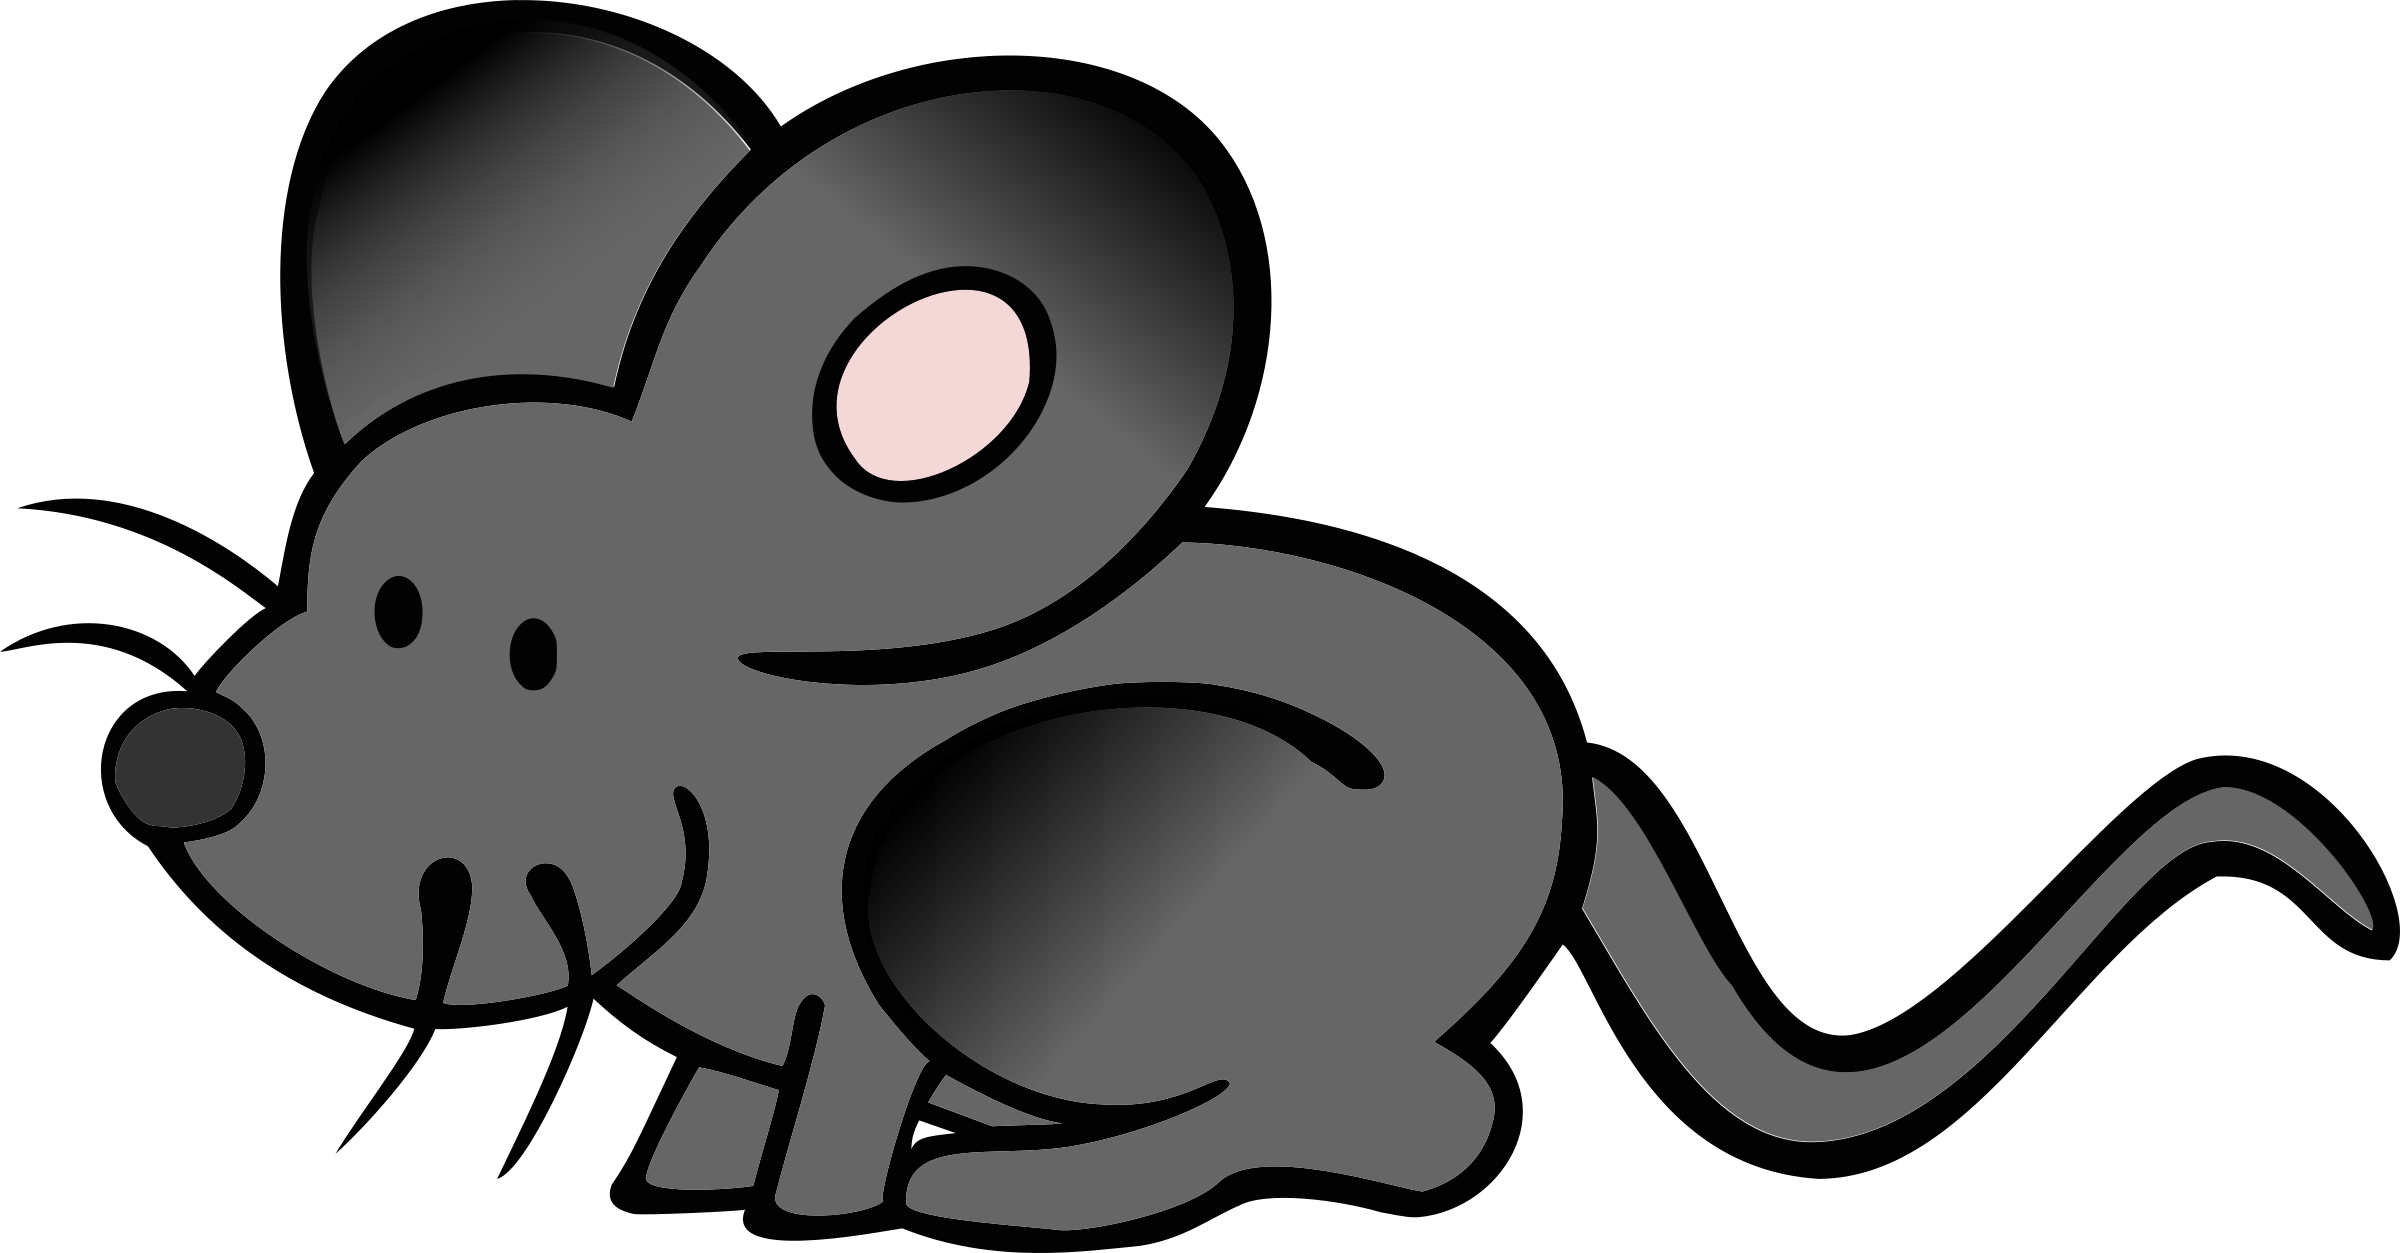 Cartoon mouse image group. Clipart rat jpeg